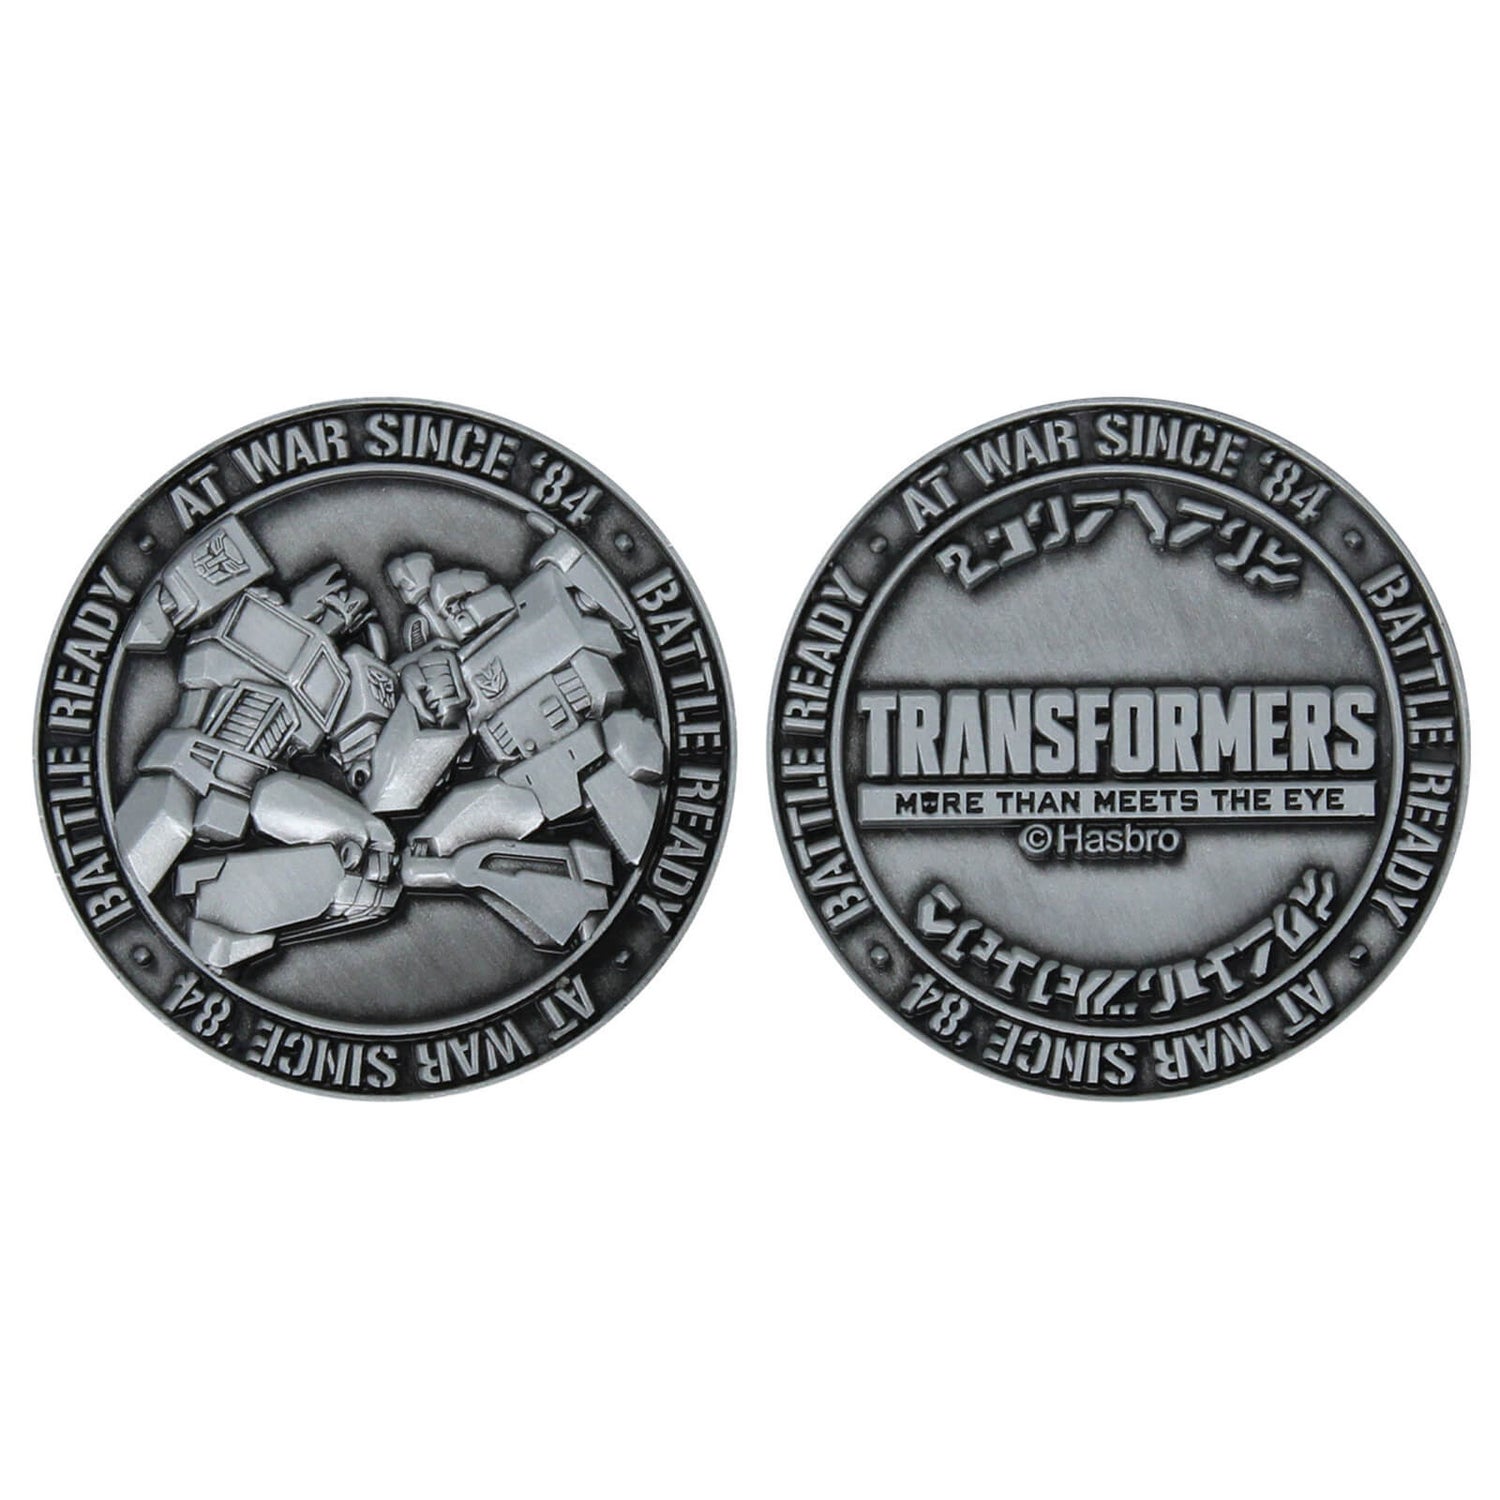 Fanattik Transformers Limited Edition Munt